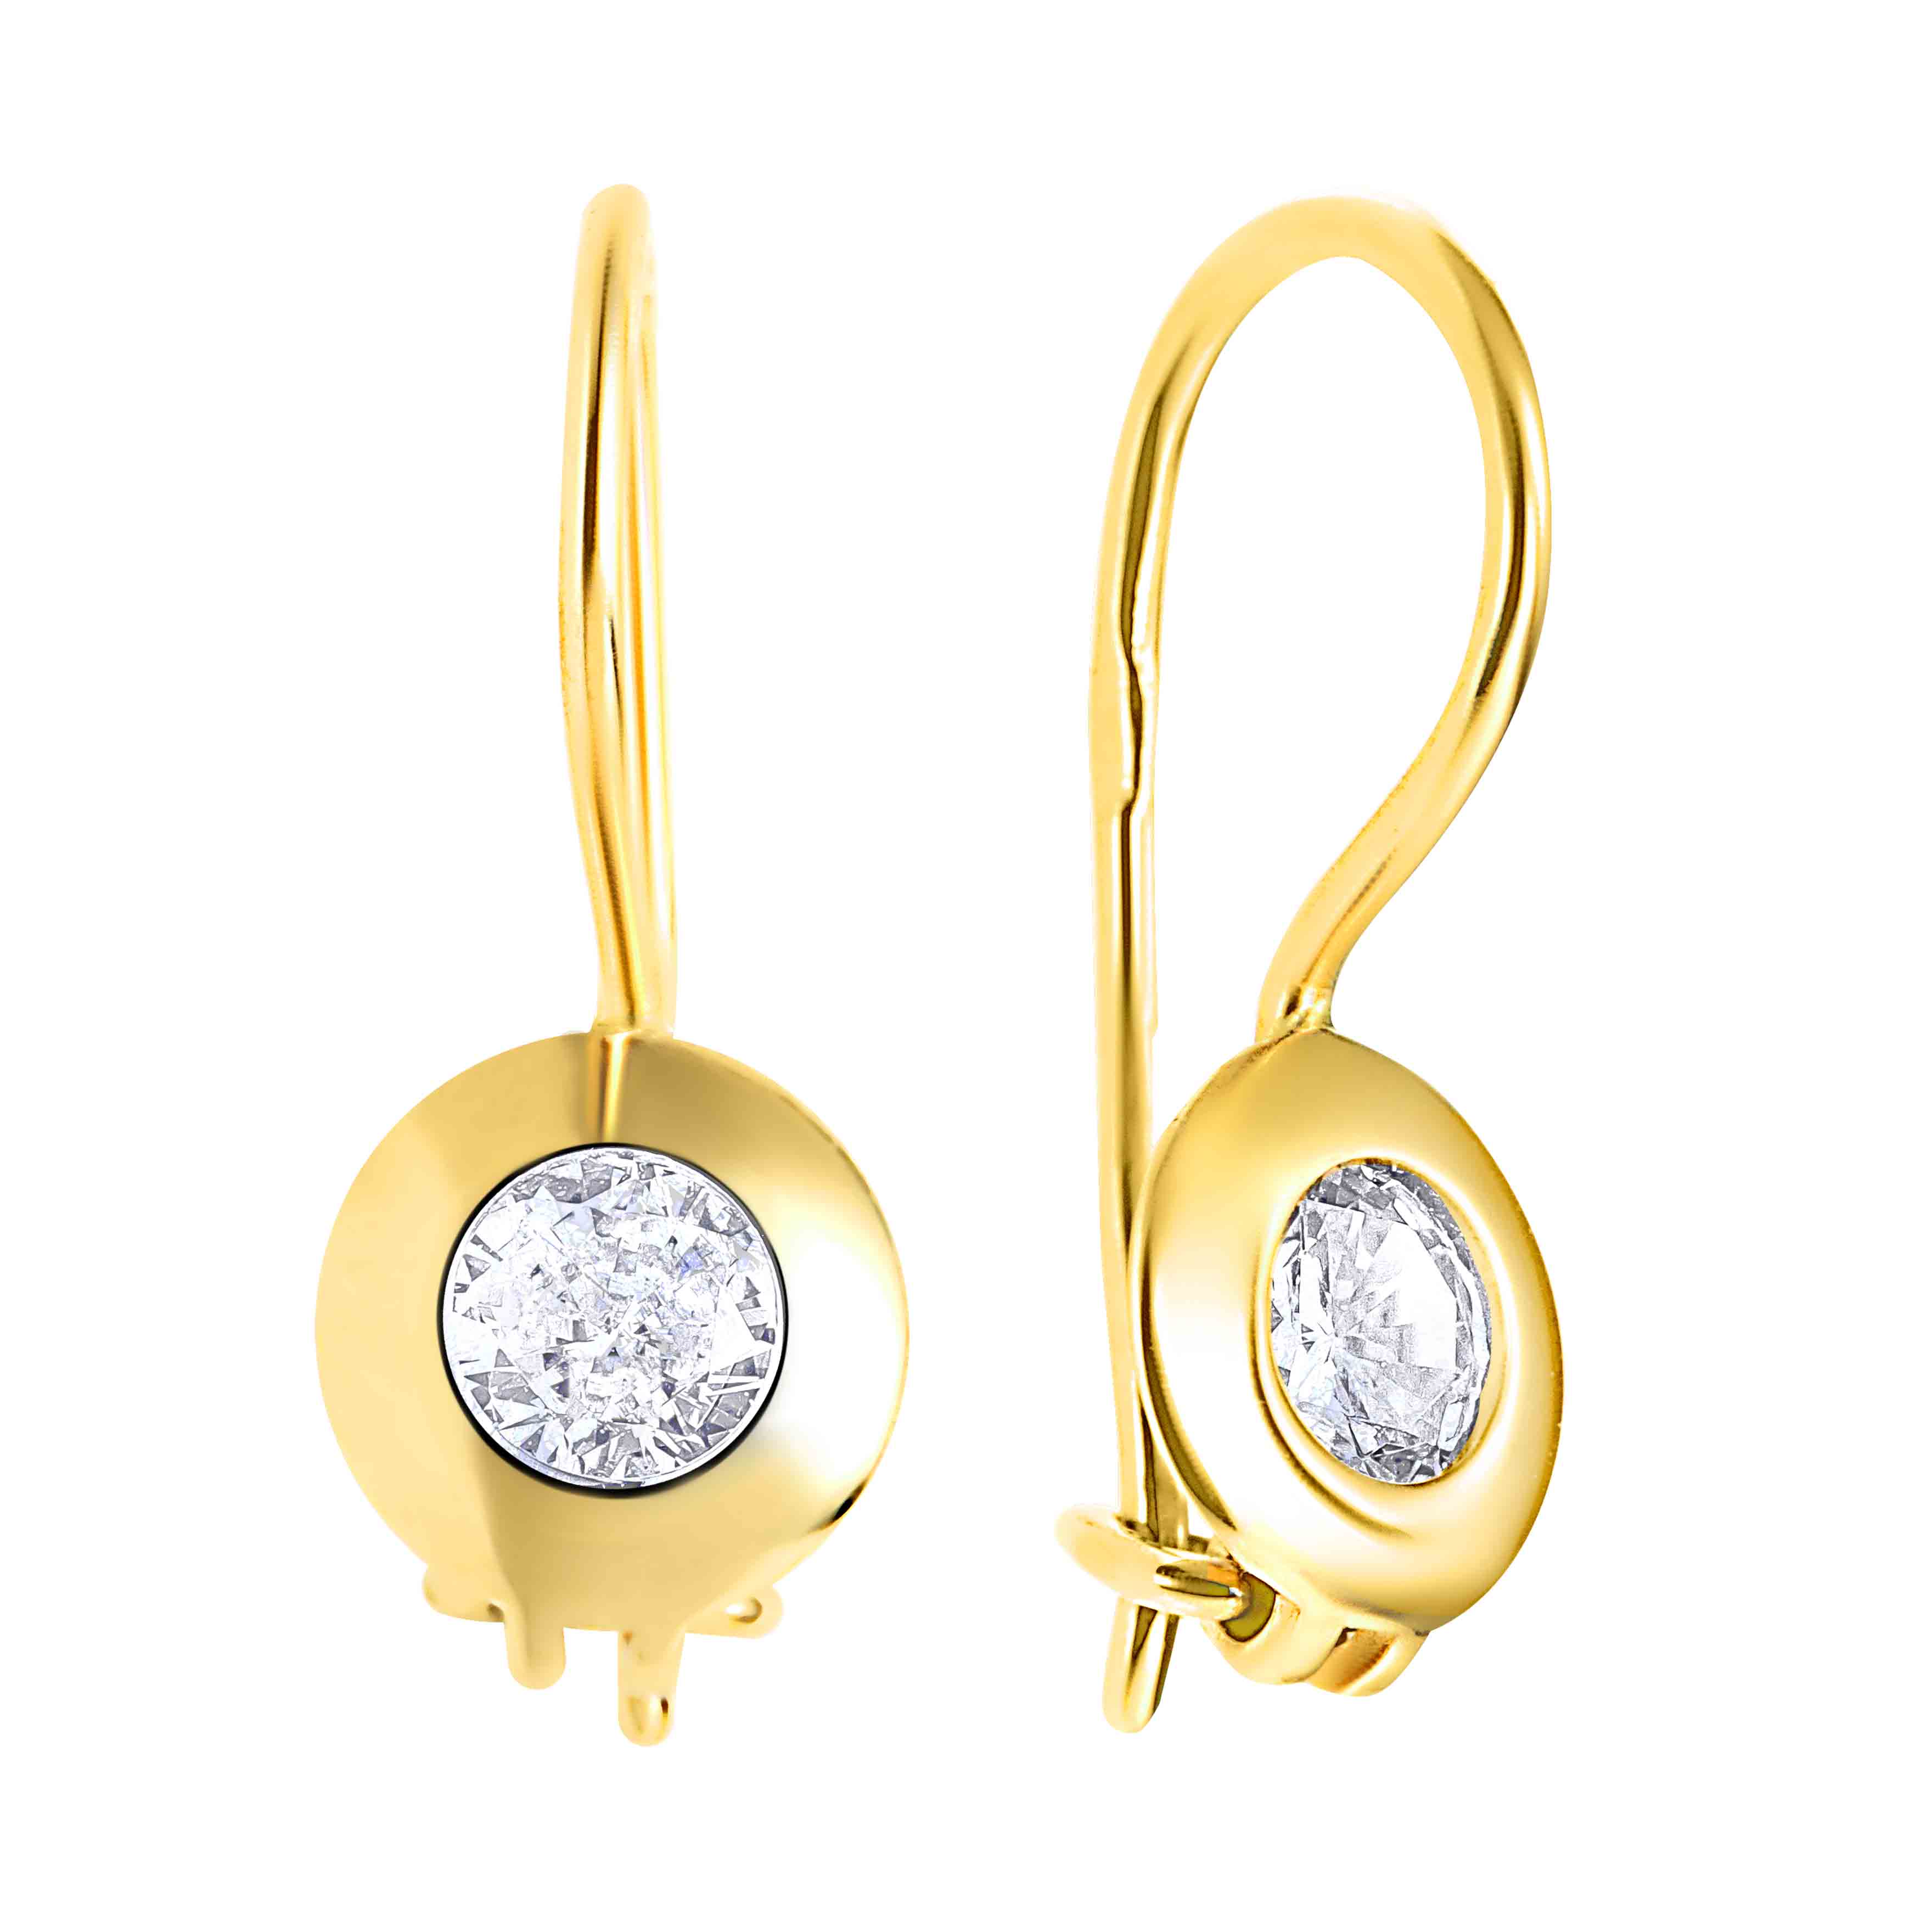 gold earring designs indian daily wear jewelry | Simple Light Weight #Gold # Earring Desig… | Gold earrings designs, Silver wedding jewelry, Minimalist earrings  gold